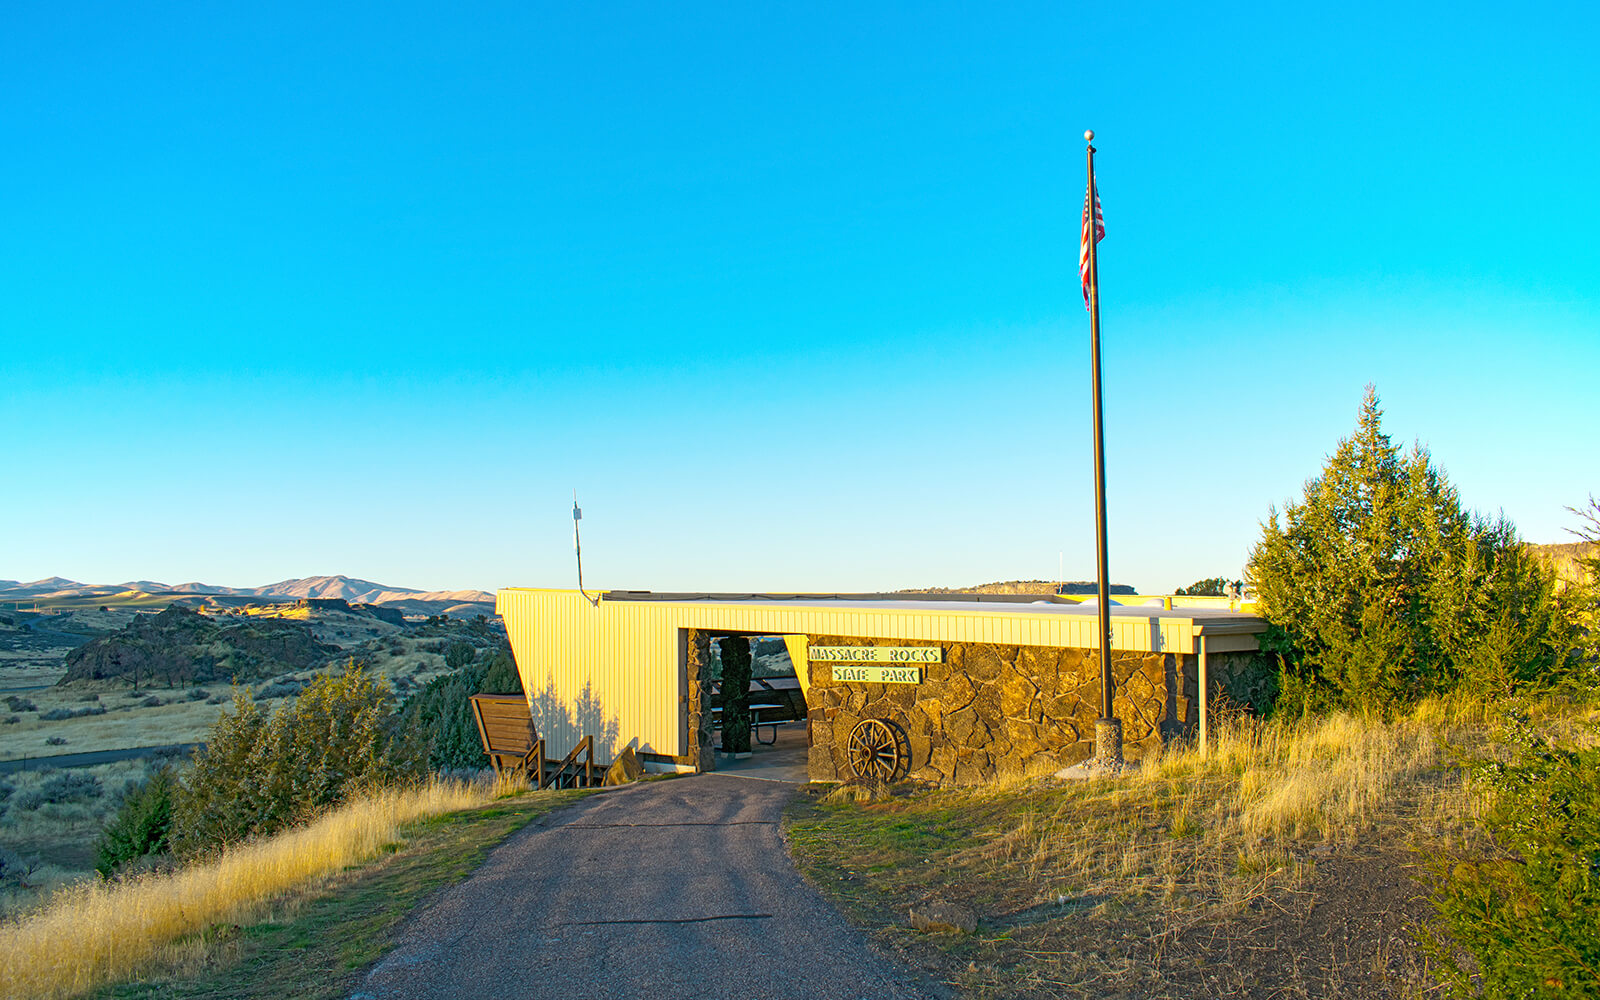 Entrance to Massacre Rocks State Park.